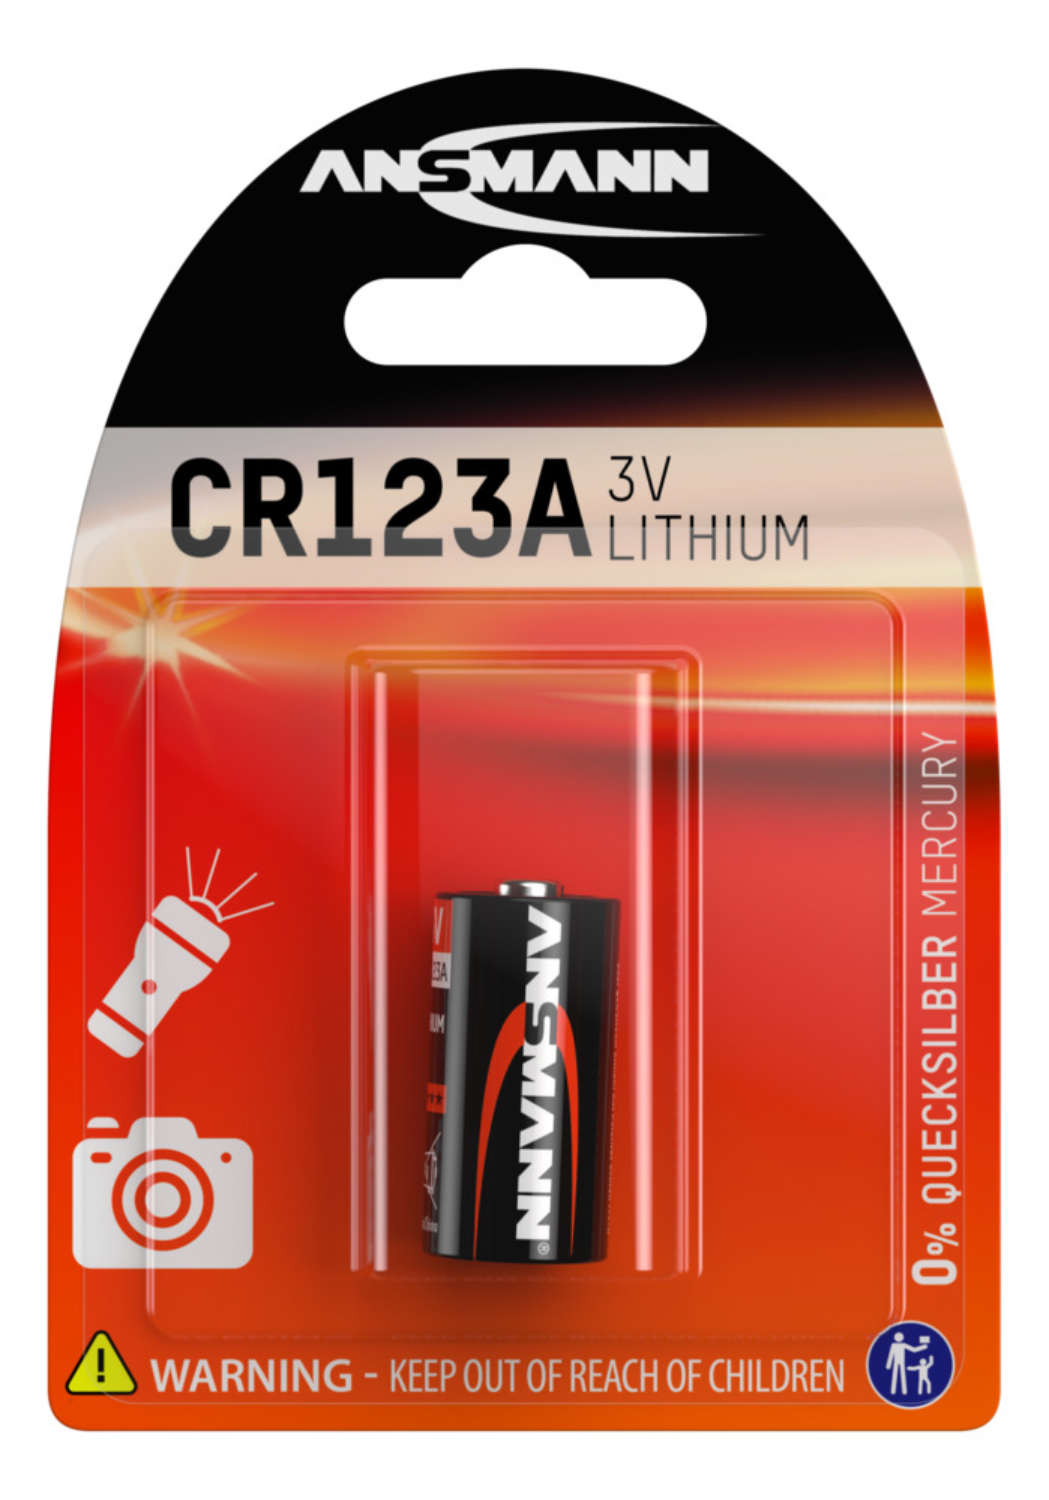 3V CR123A / CR17335 Lithium Battery